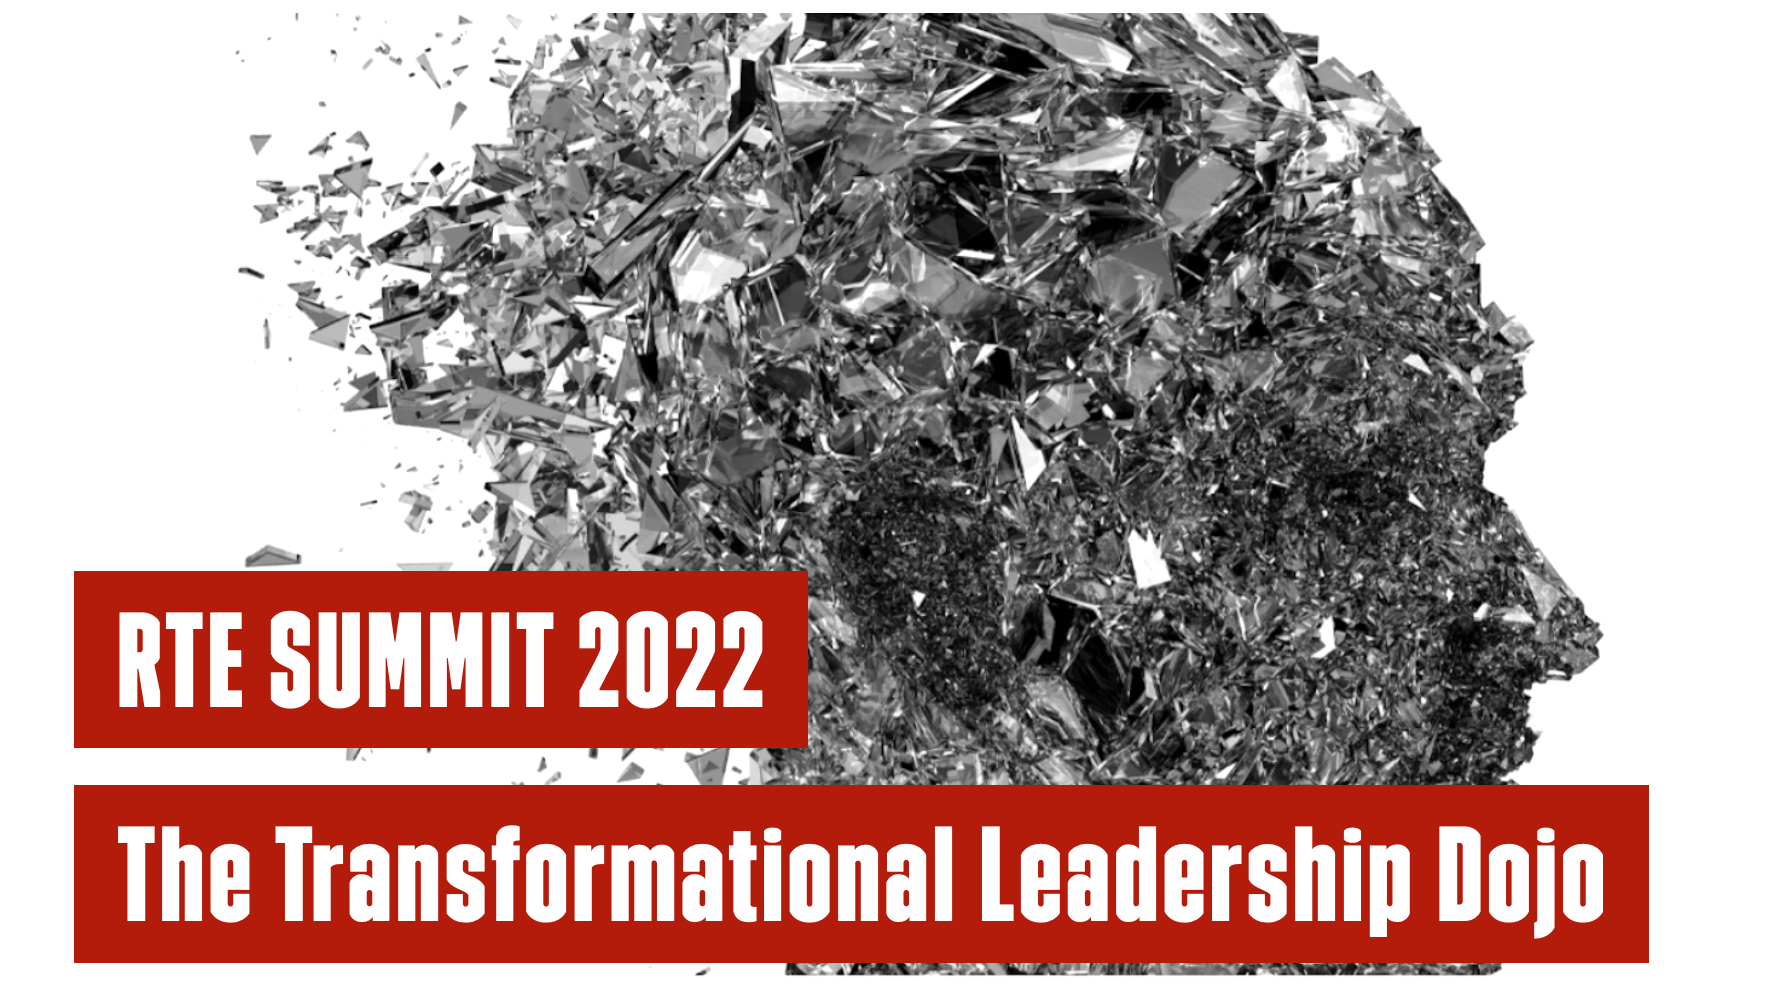 The Transformational Leadership Dojo - practical Leadership Tools for the RTE